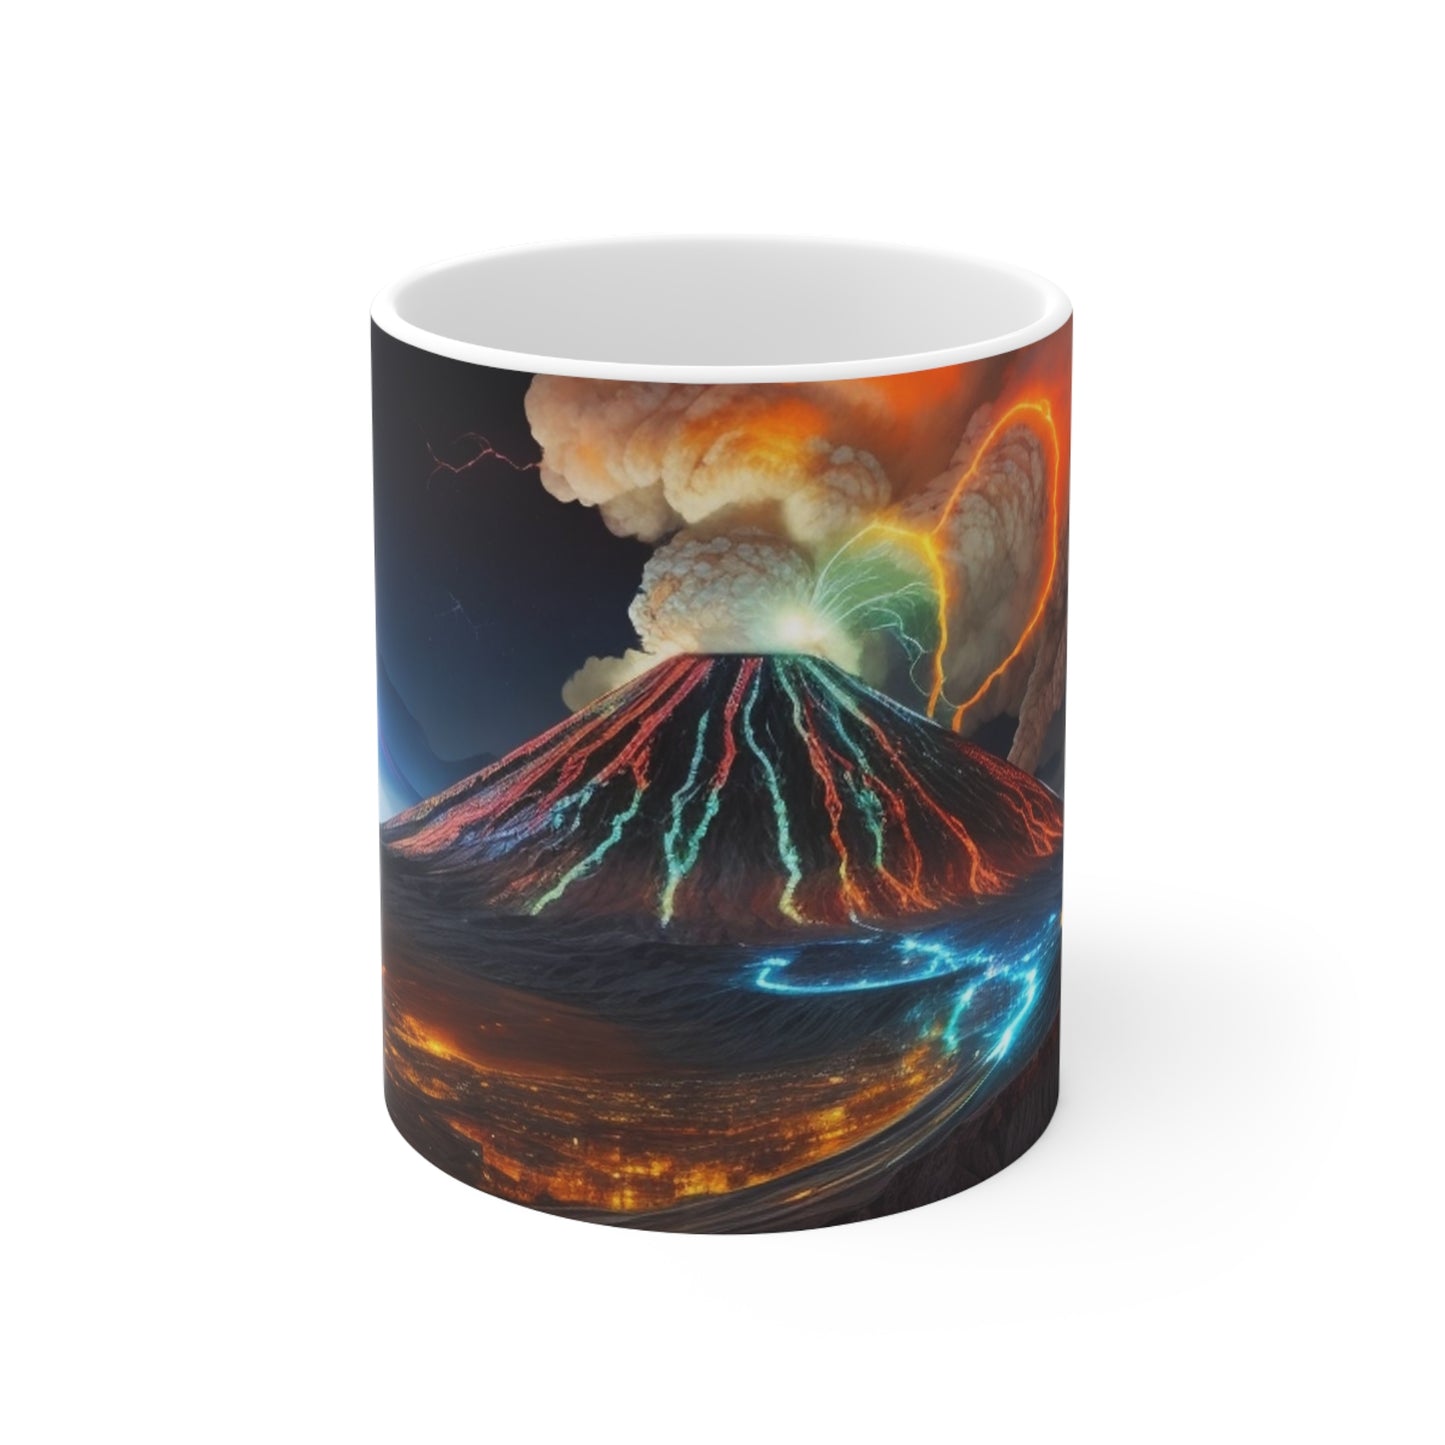 Colourful, Smoke Volcano Mug - Ceramic Coffee Mug 11oz